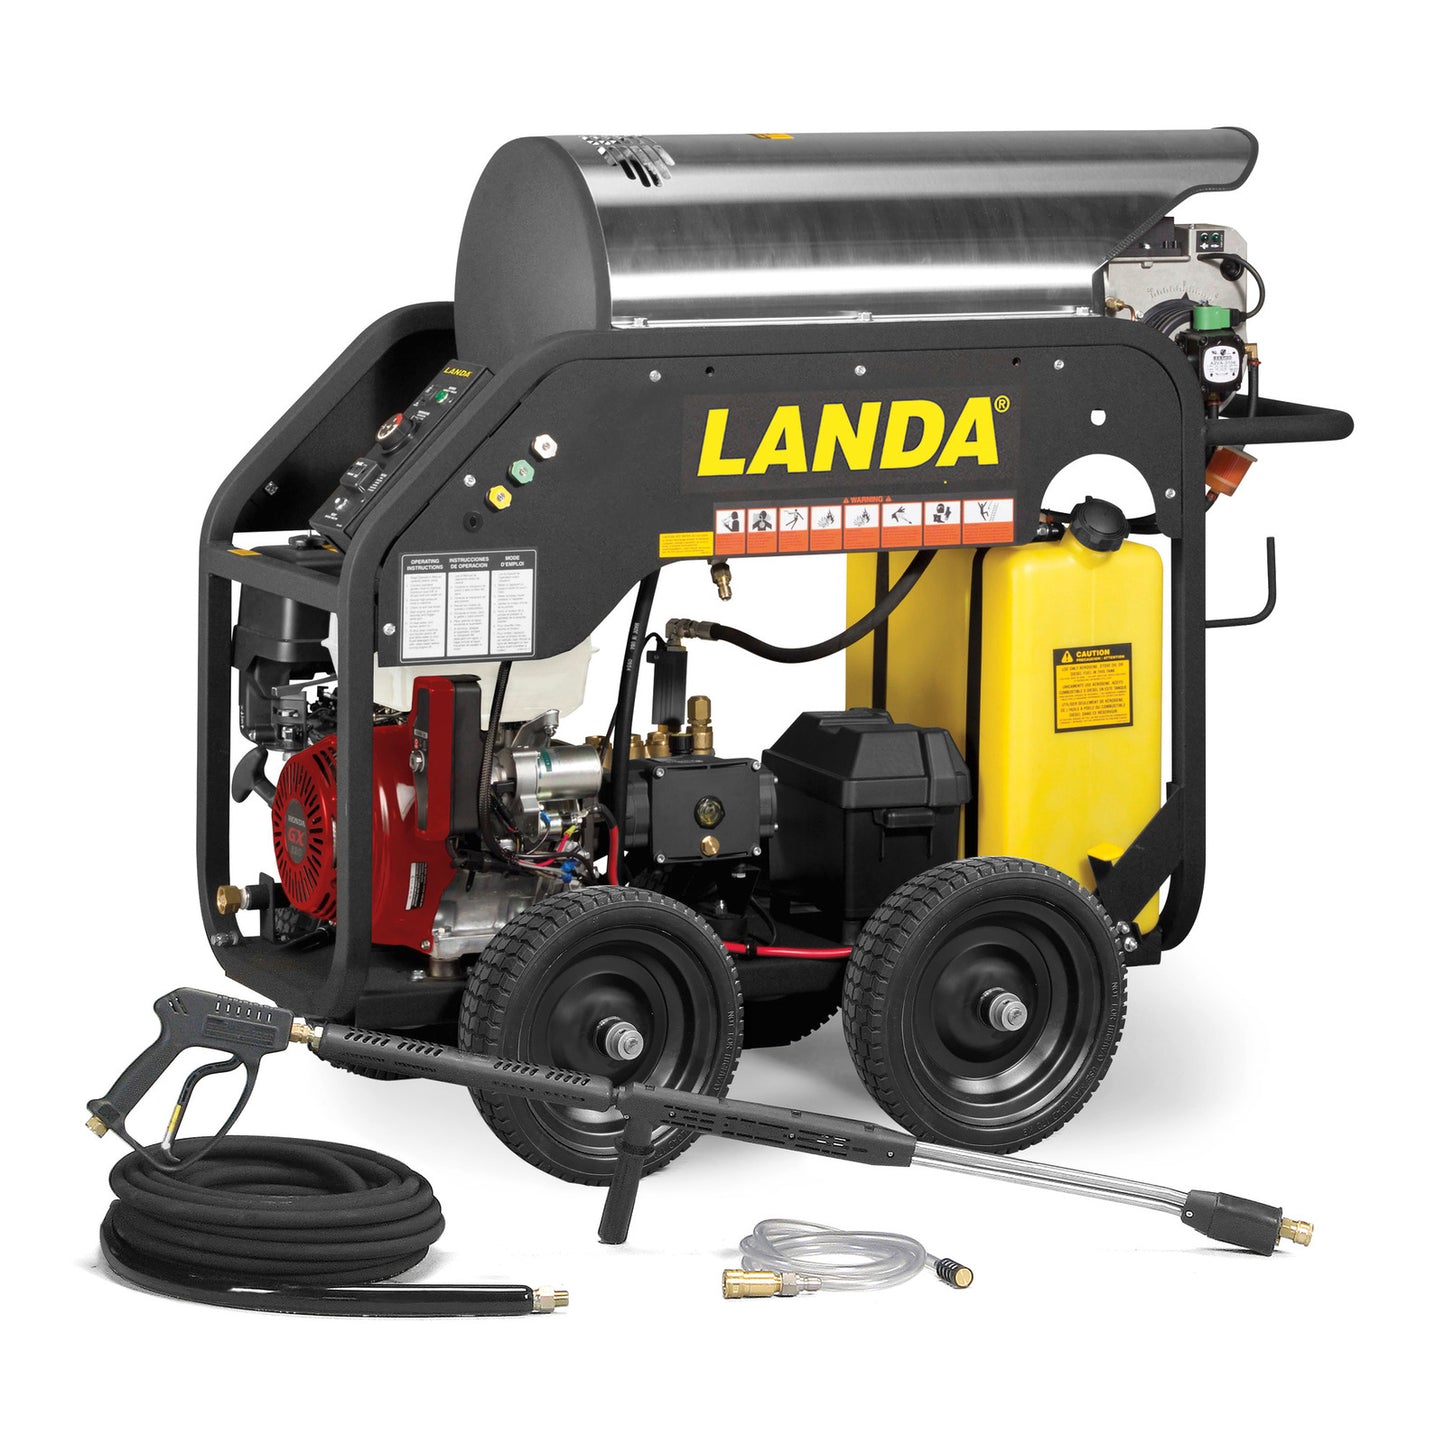 Landa MHC Series Gasoline Hot Water Pressure Washer